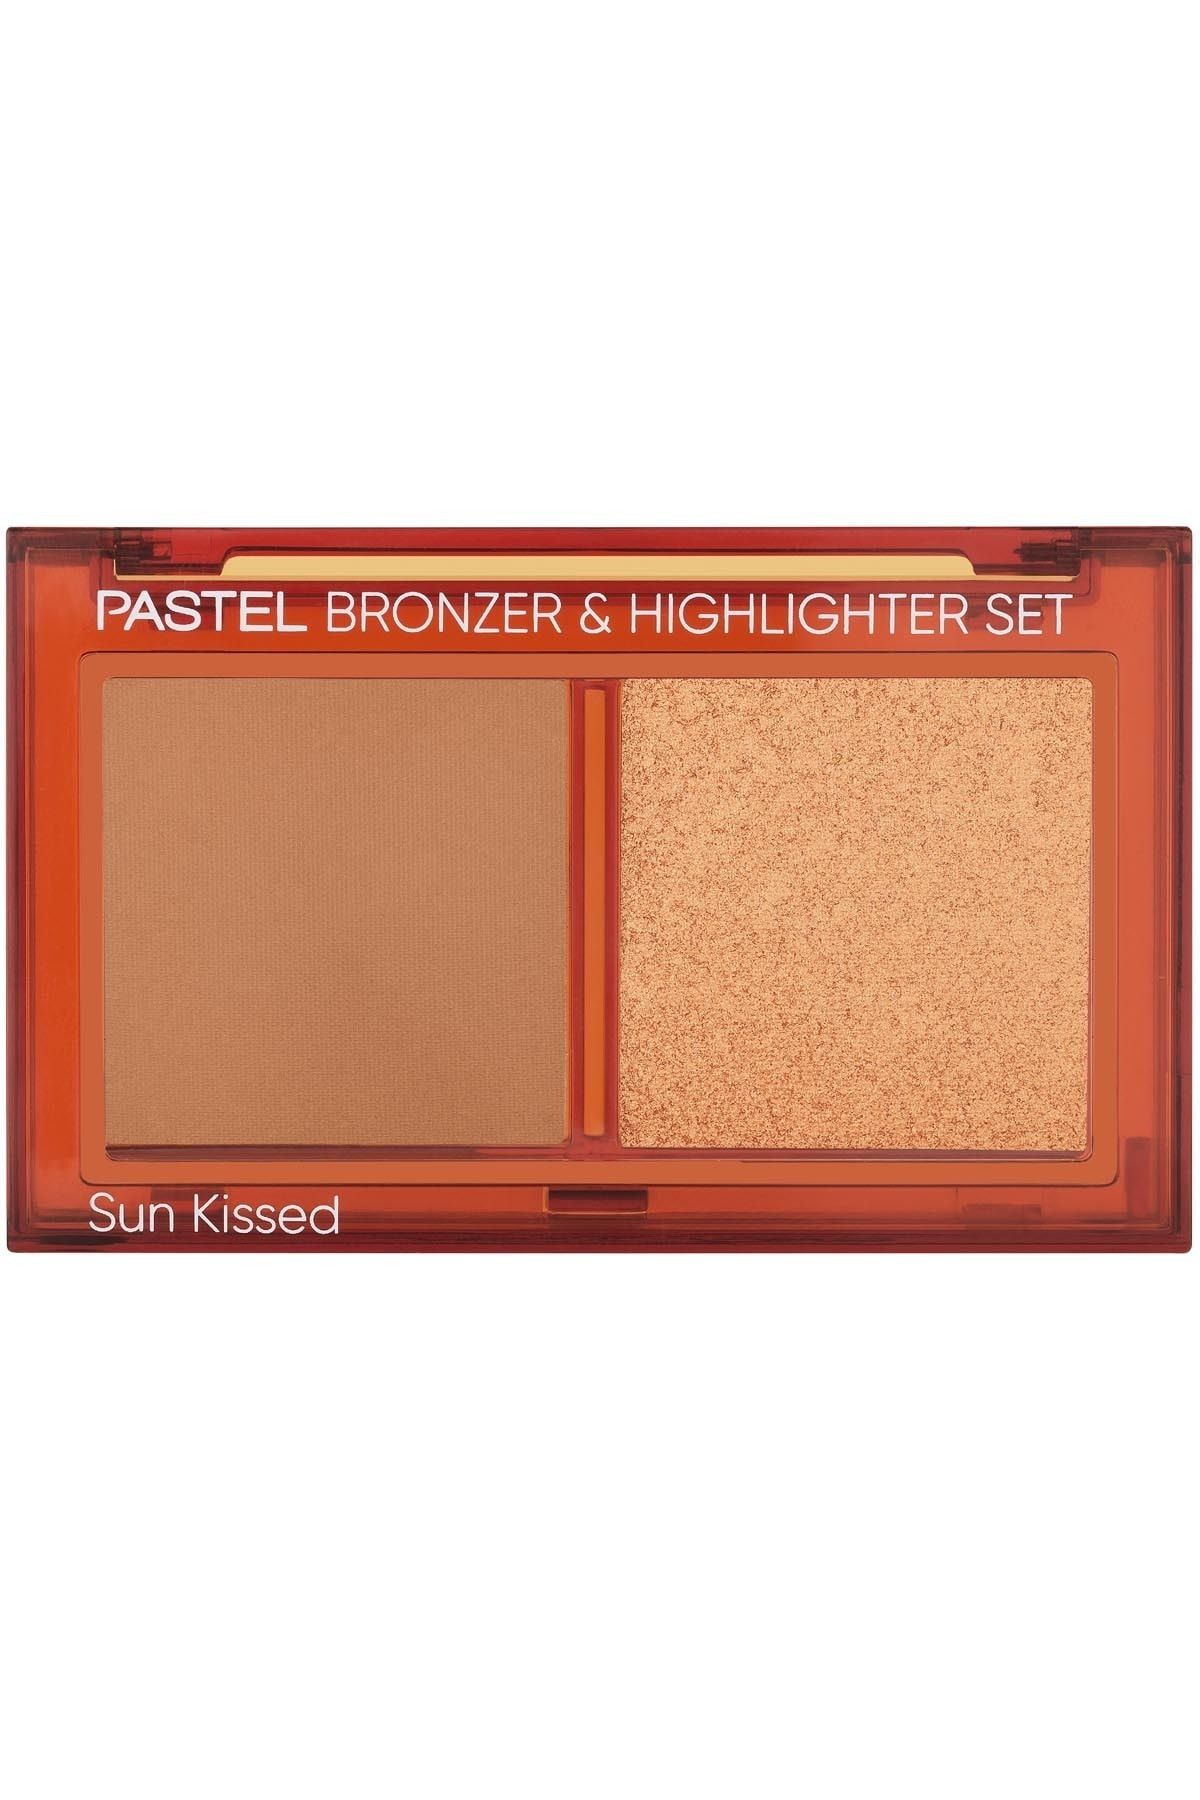 Pastel Bronzer & Highlighter Set Sun Kissed 02 Tan Bronze & Heat Glow